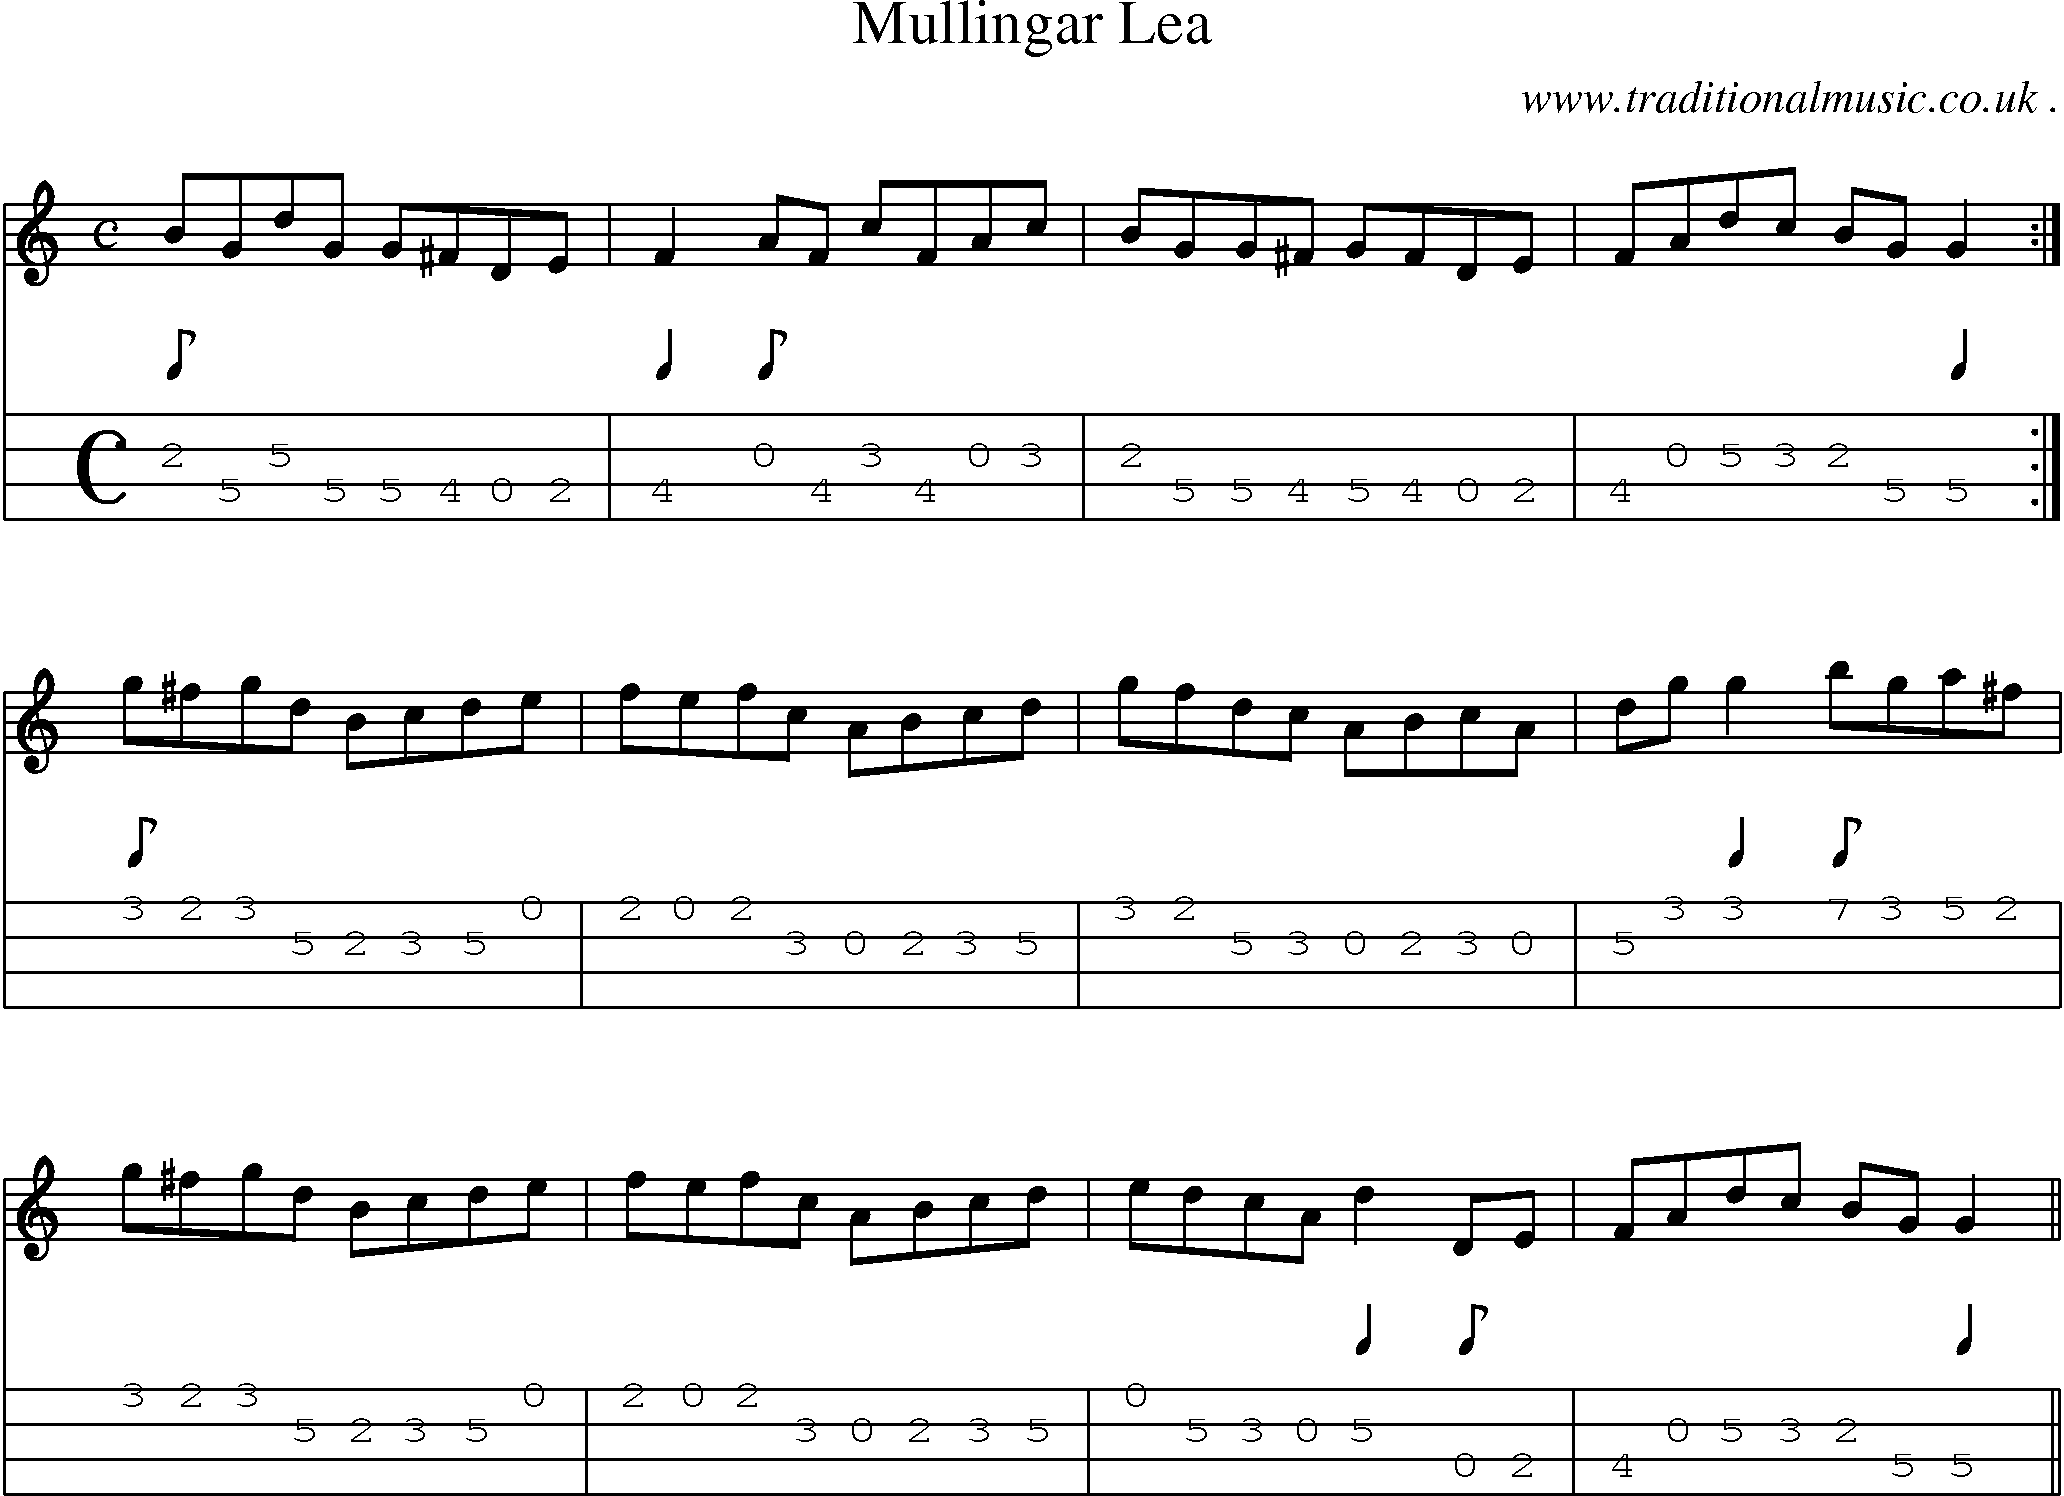 Sheet-Music and Mandolin Tabs for Mullingar Lea